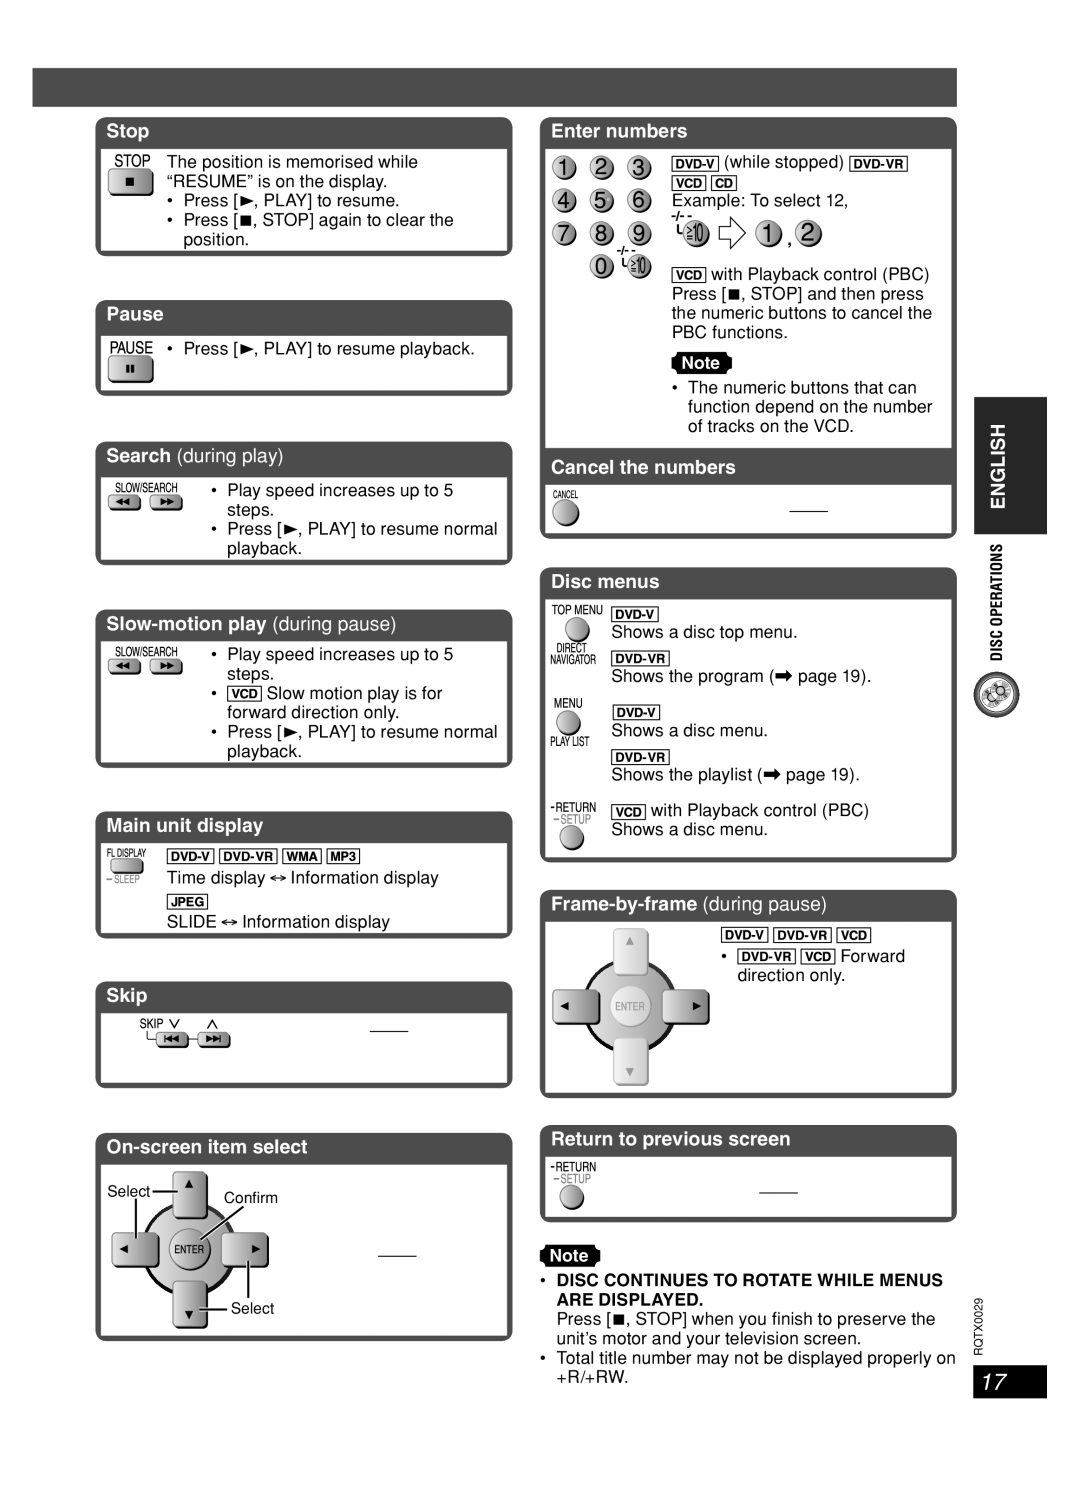 Panasonic sc-pt150 manual Stop, Search during play 